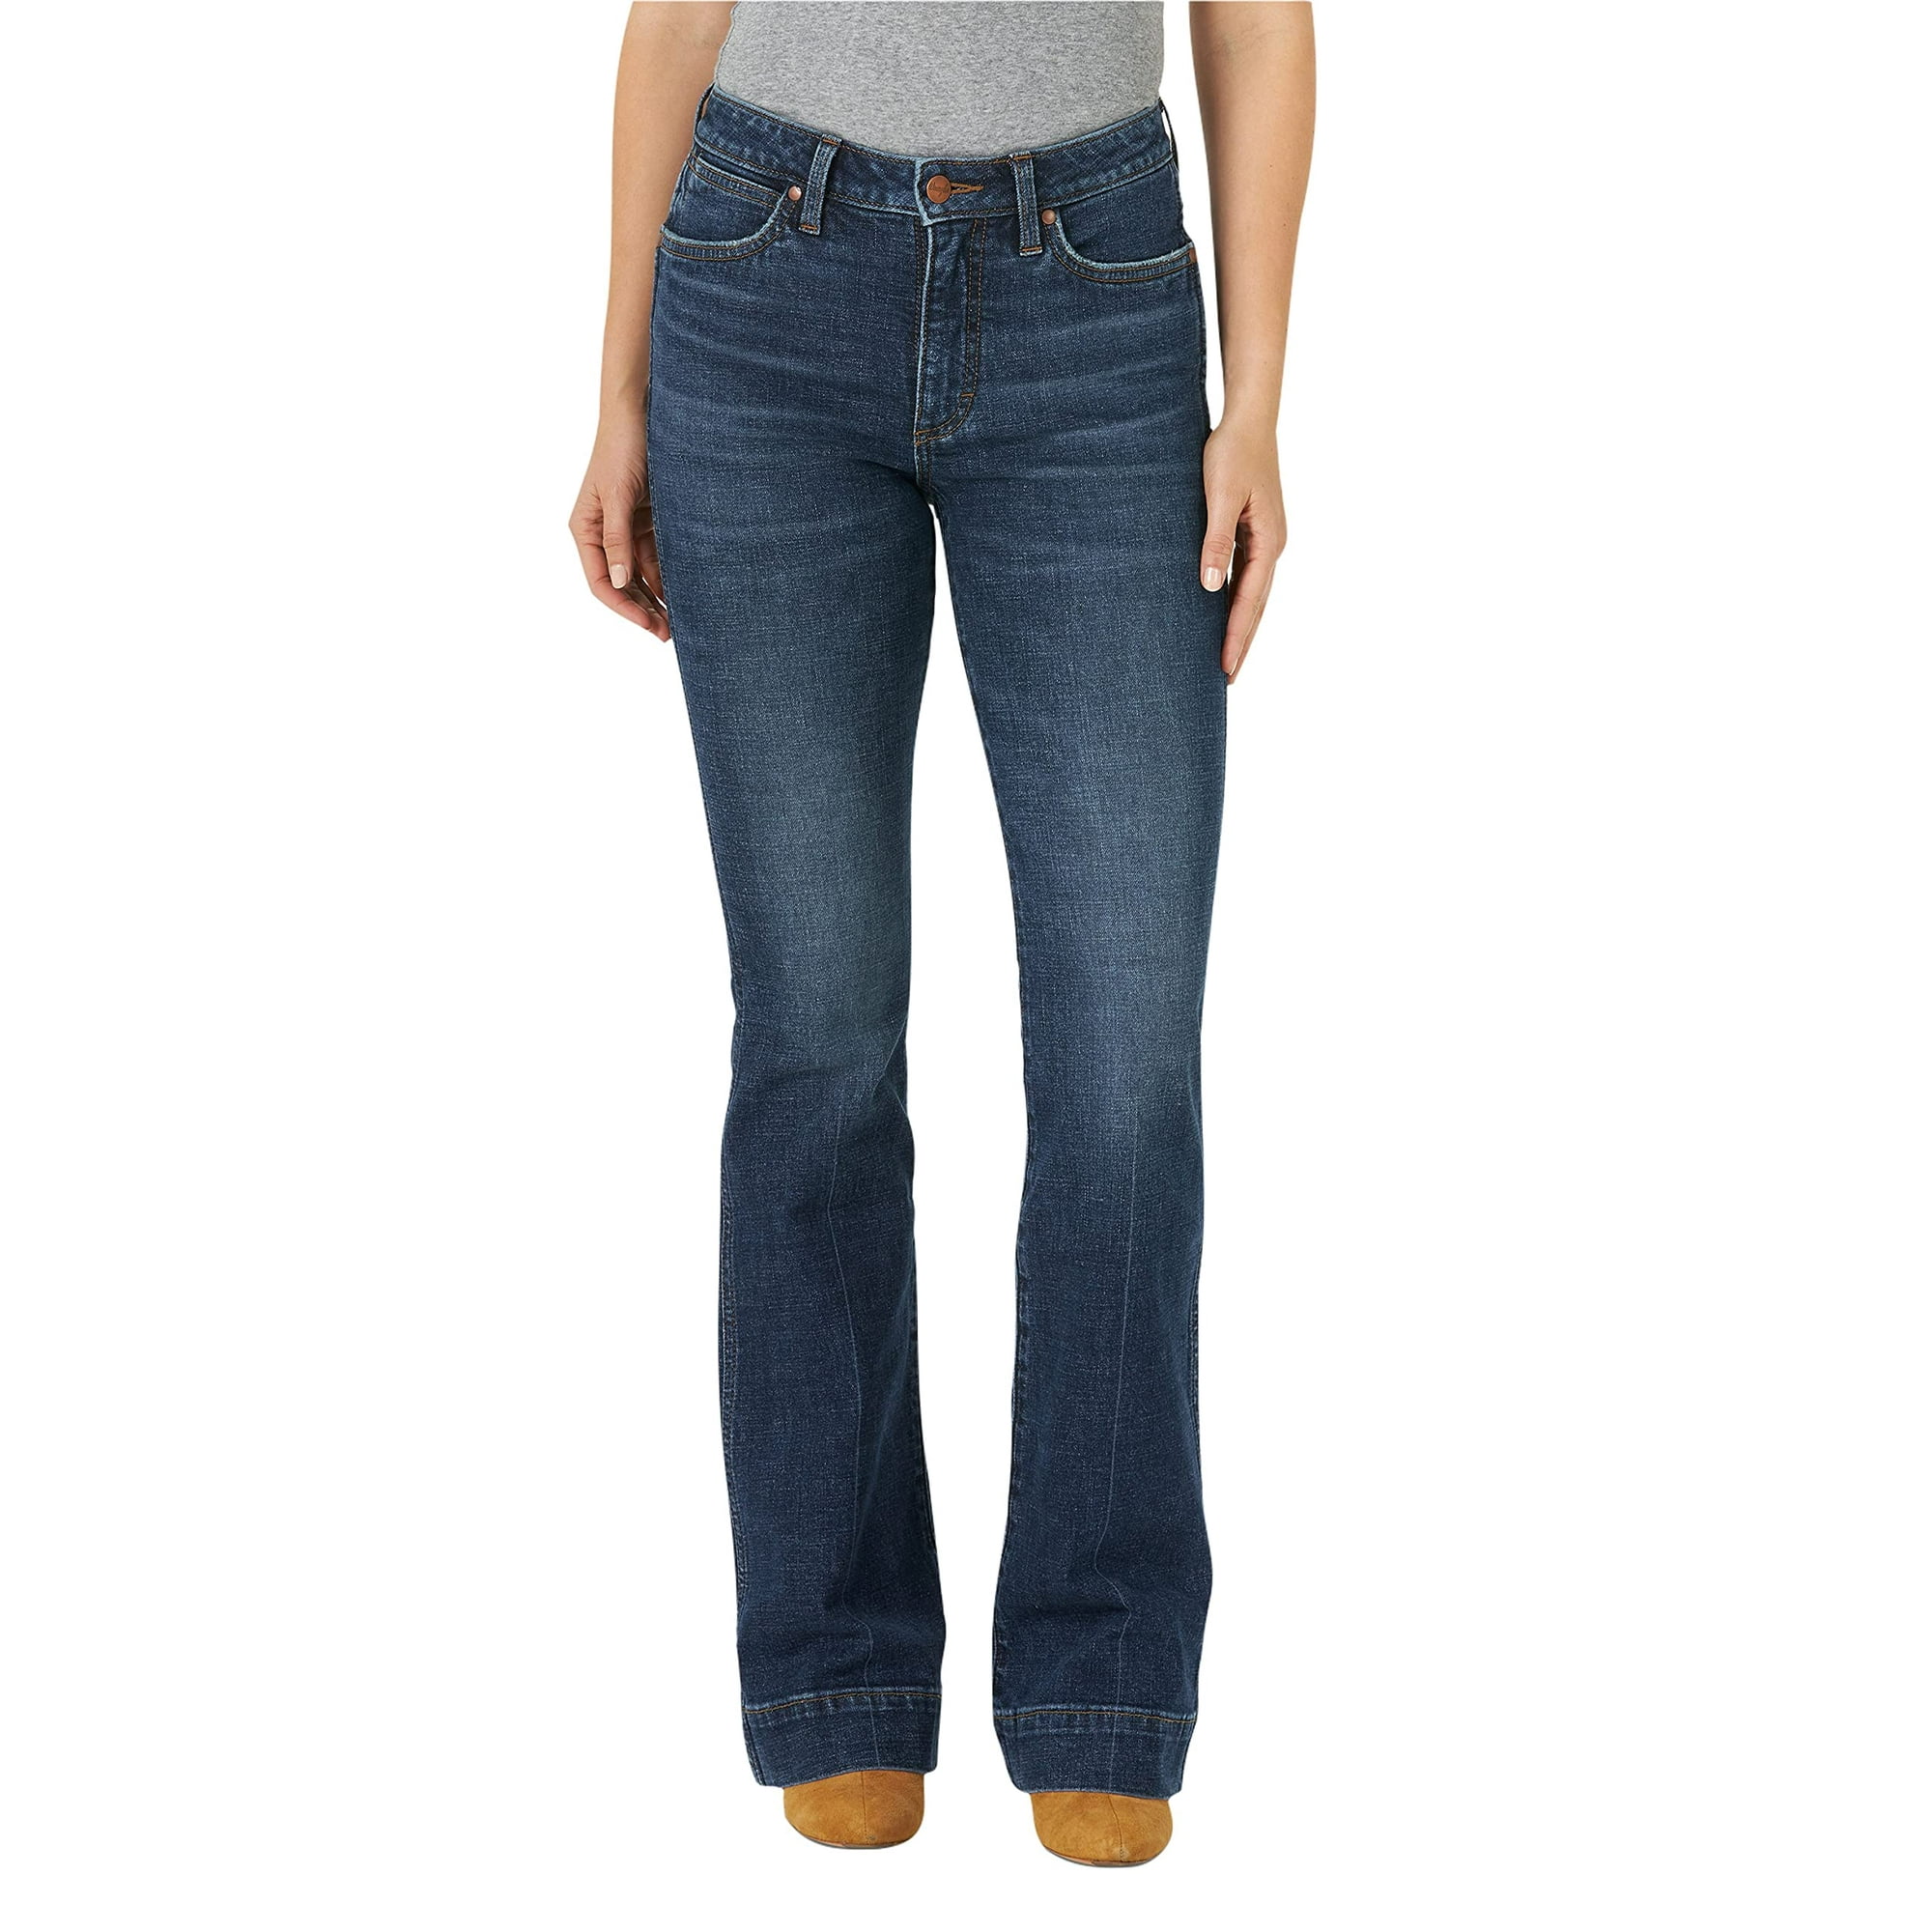 Wrangler Retro High Rise Trouser Green Jean, Sara, 26W x 36L | Walmart  Canada